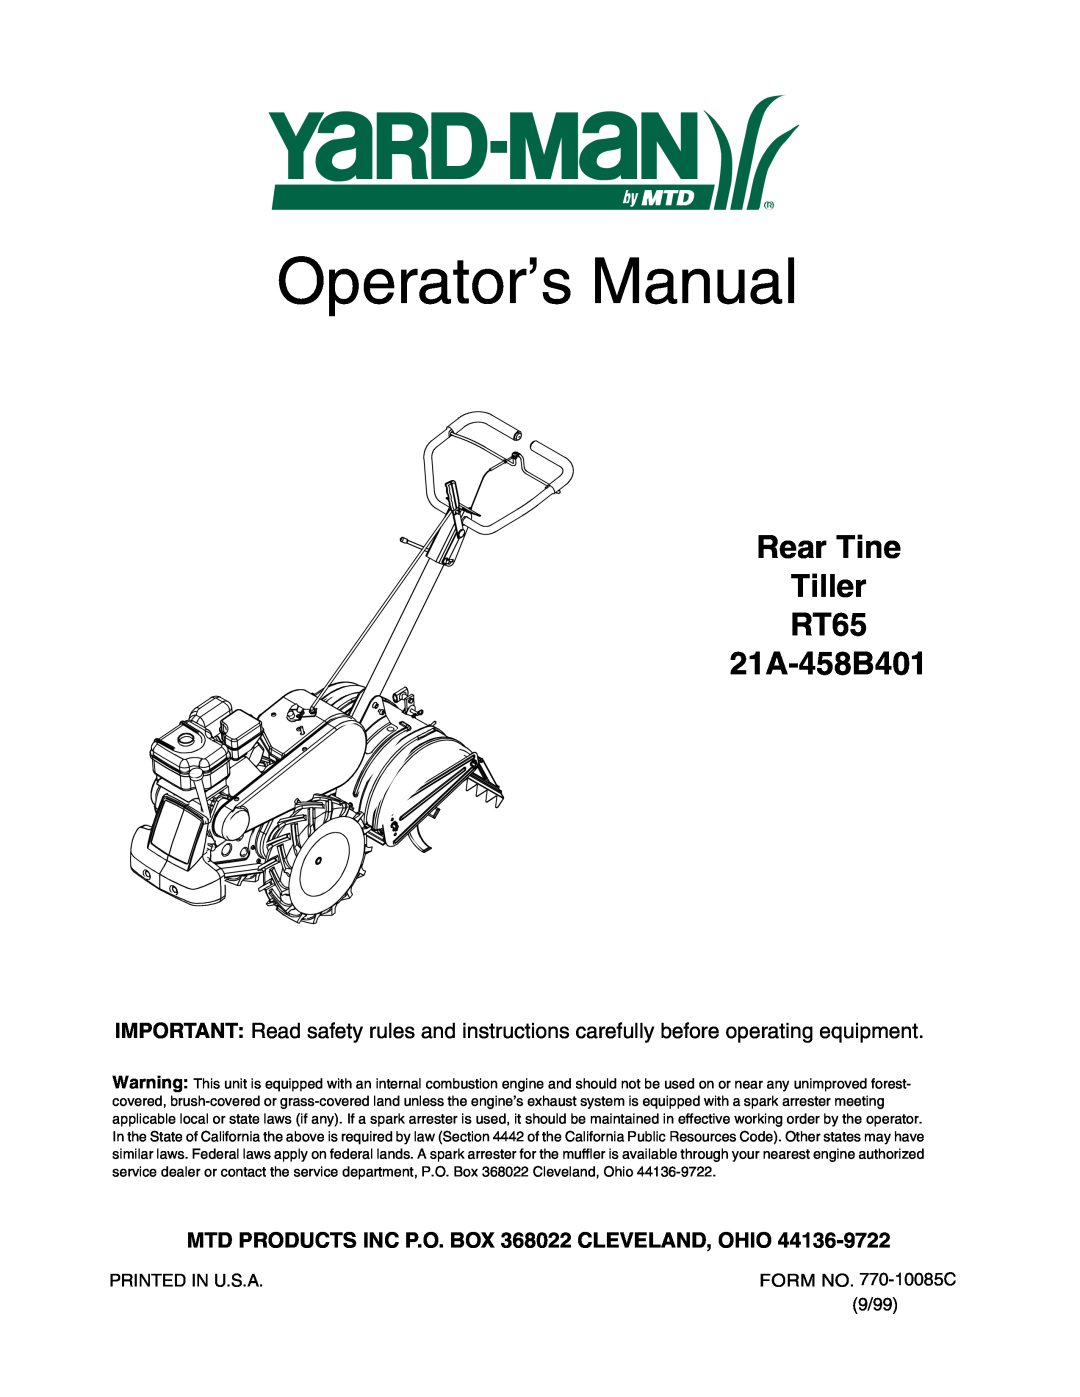 Yard-Man manual Operator’s Manual, Rear Tine Tiller RT65 21A-458B401, MTD PRODUCTS INC P.O. BOX 368022 CLEVELAND, OHIO 